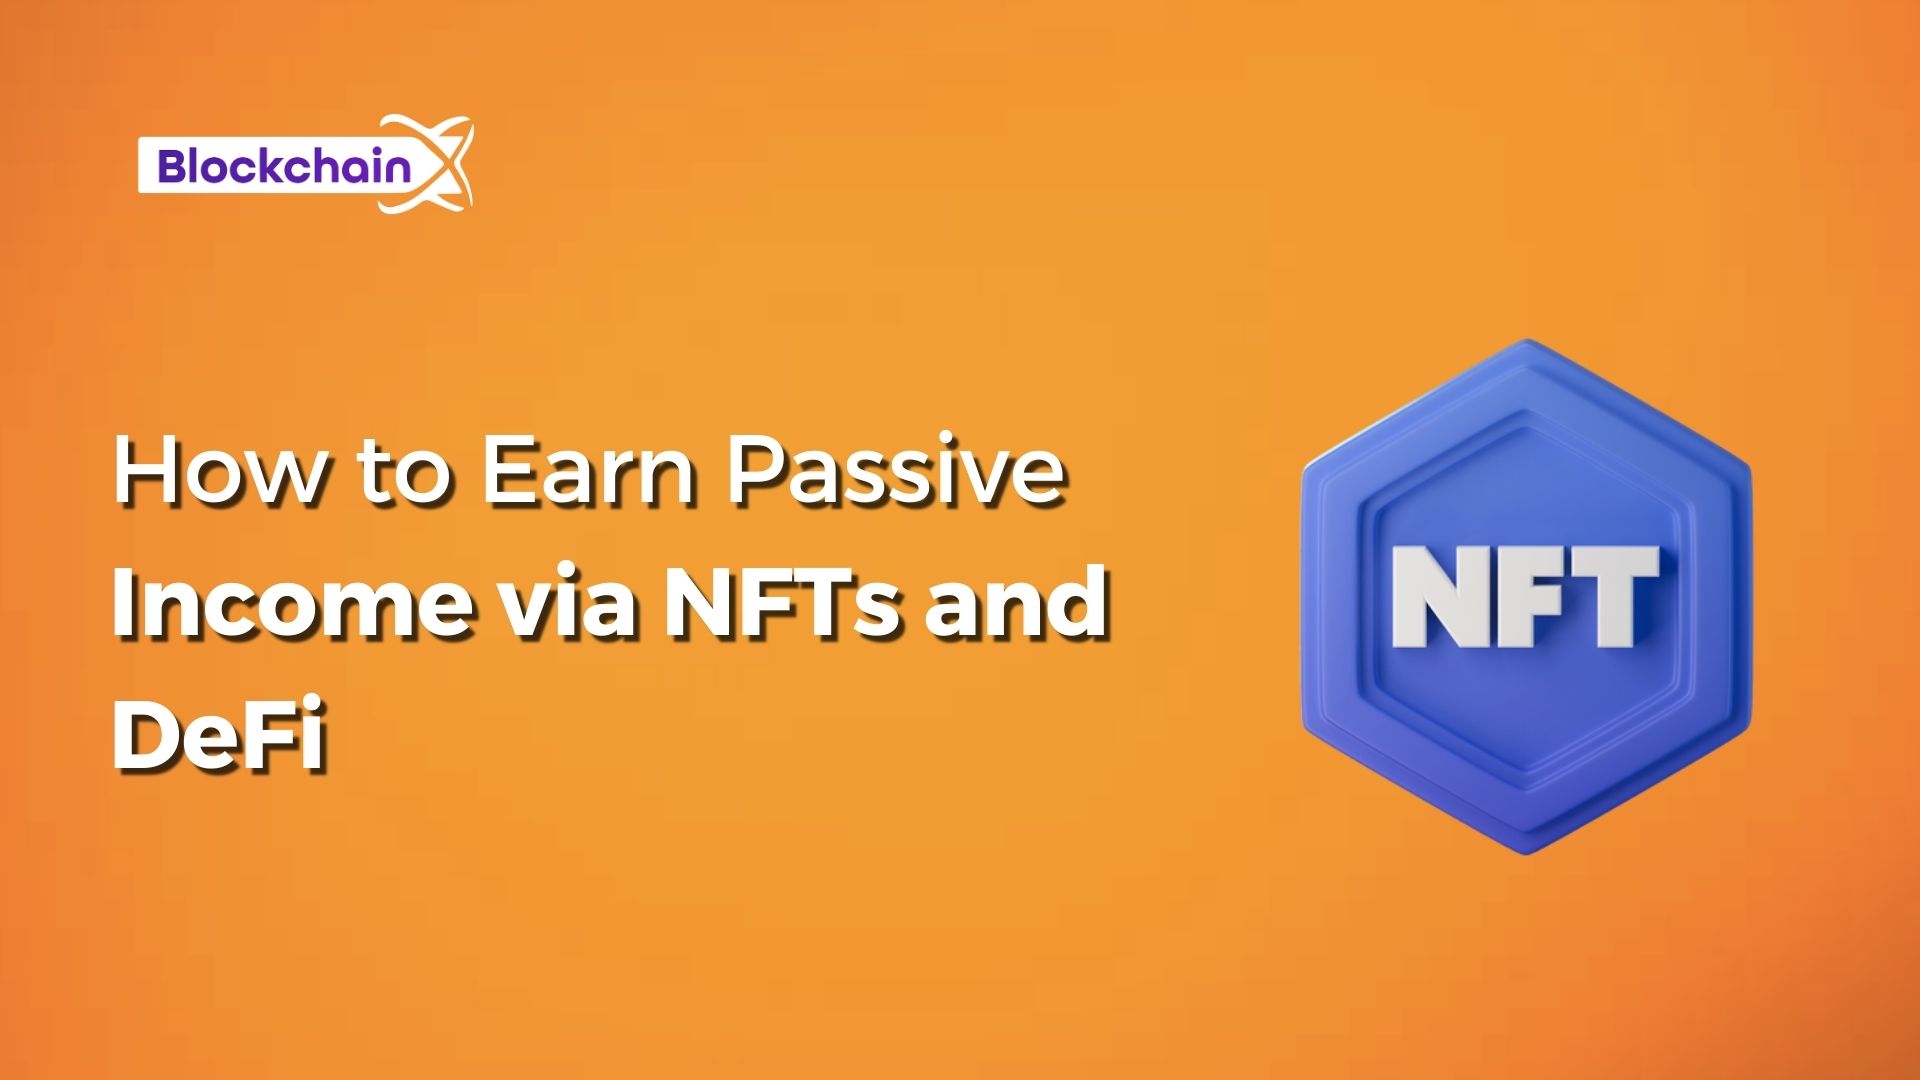 Earn passive income via NFT and DiFi